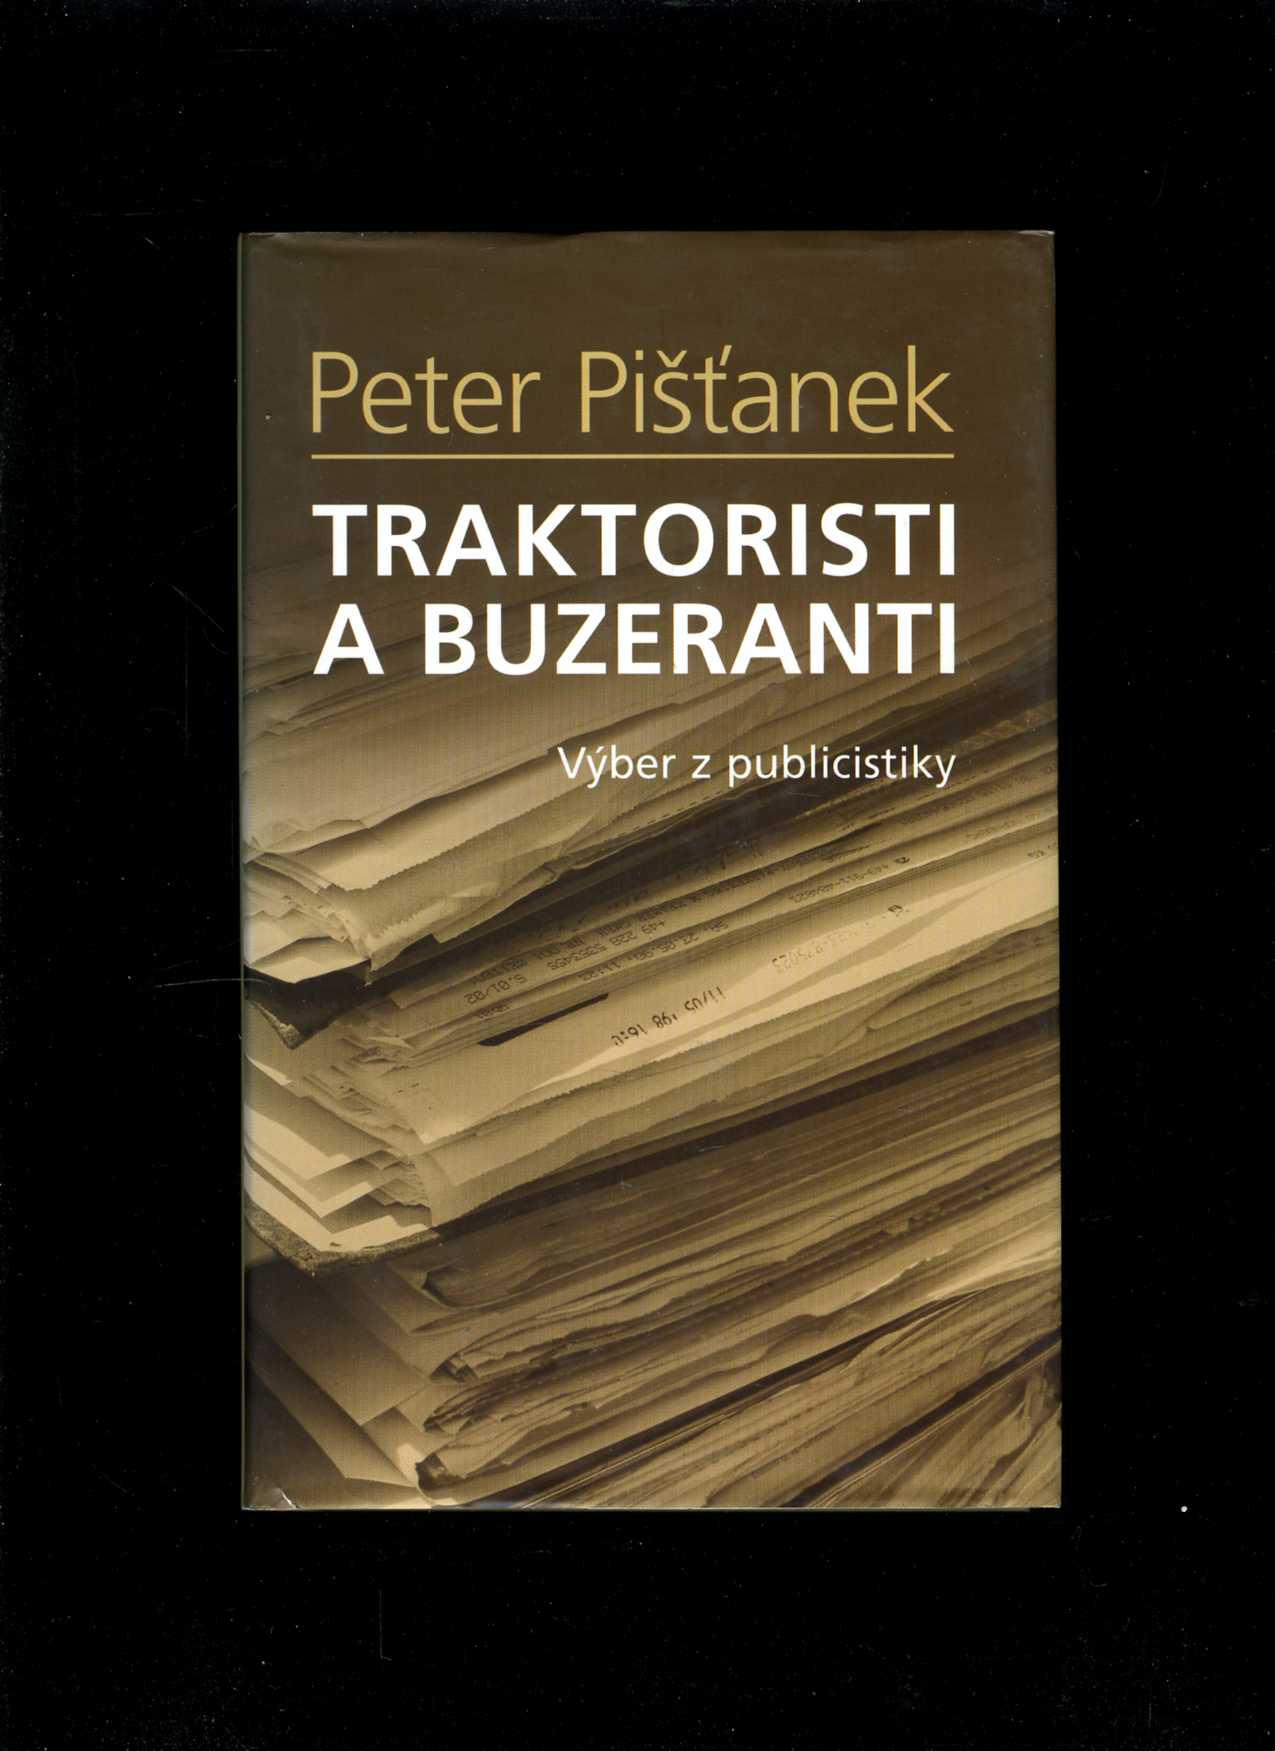 Traktoristi a buzeranti (Peter Pišťanek)